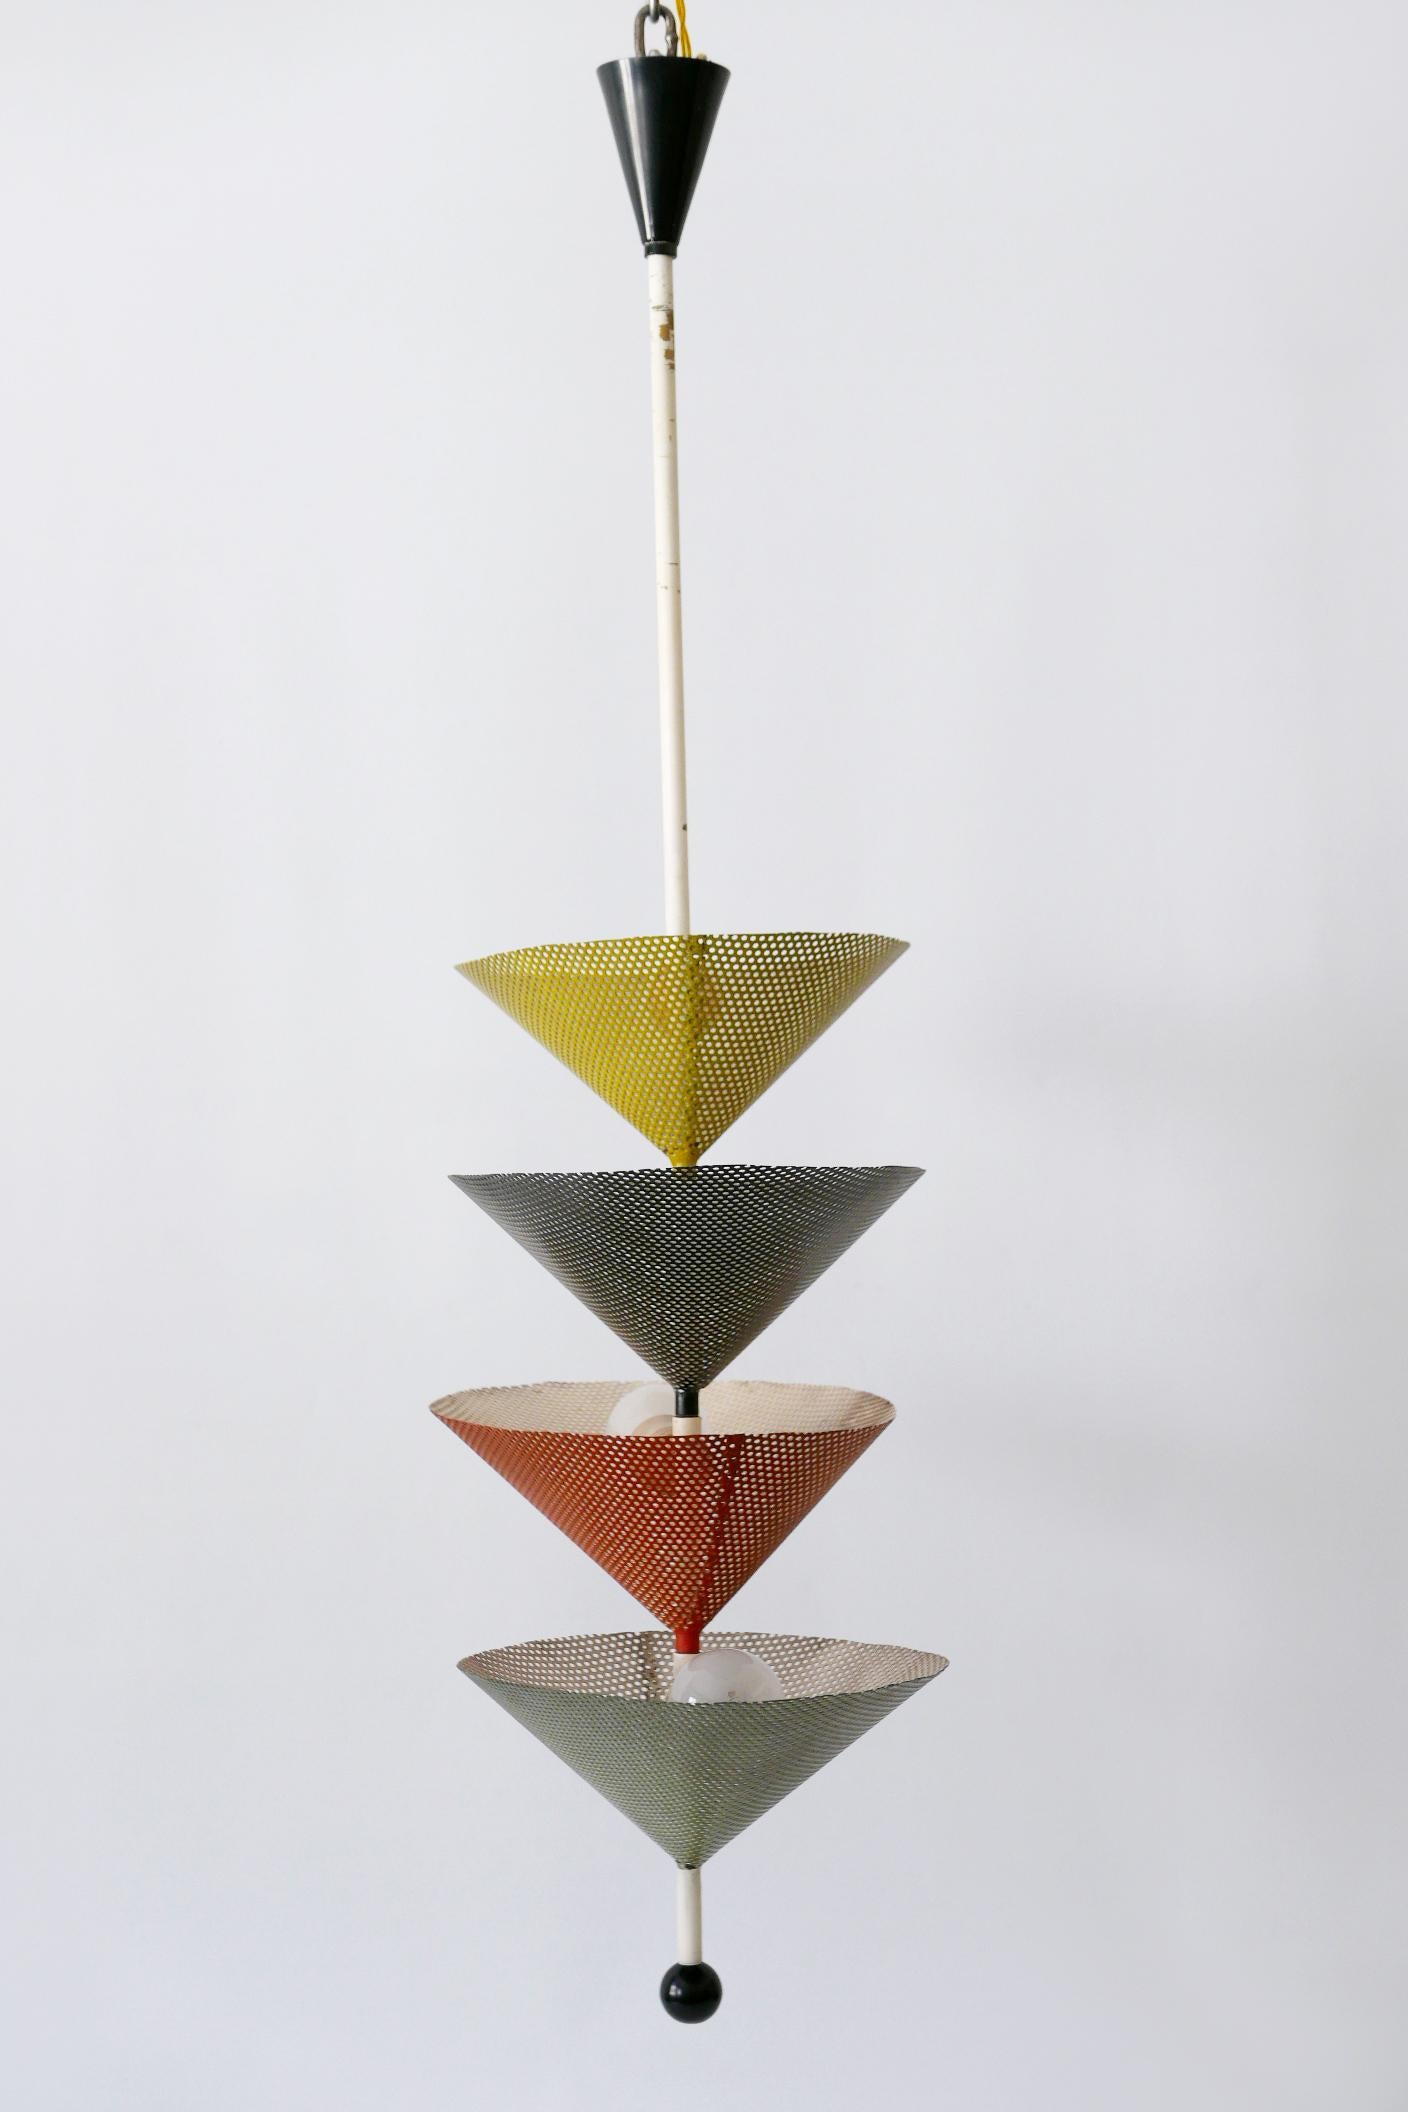 Rare Mid-Century Modern Chandelier or Pendant Lamp by Mathieu Matégot 1950s 4